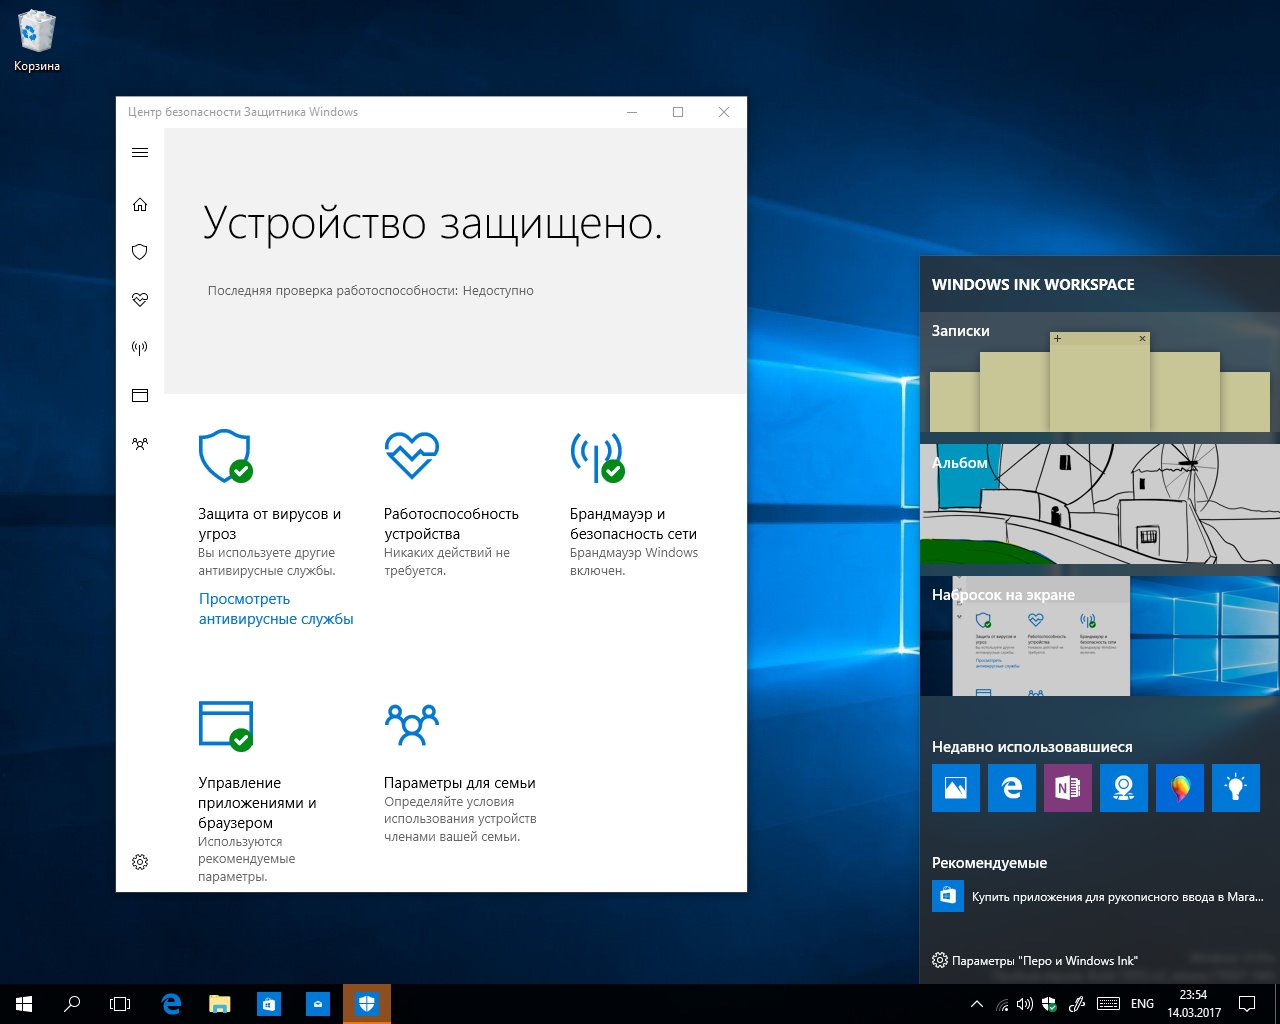 Windows 10 Insider Preview. Центр безопасности Майкрософт виндовс. Видео как найти центр безопасности защитника Windows. Центр безопасности защитника Windows.